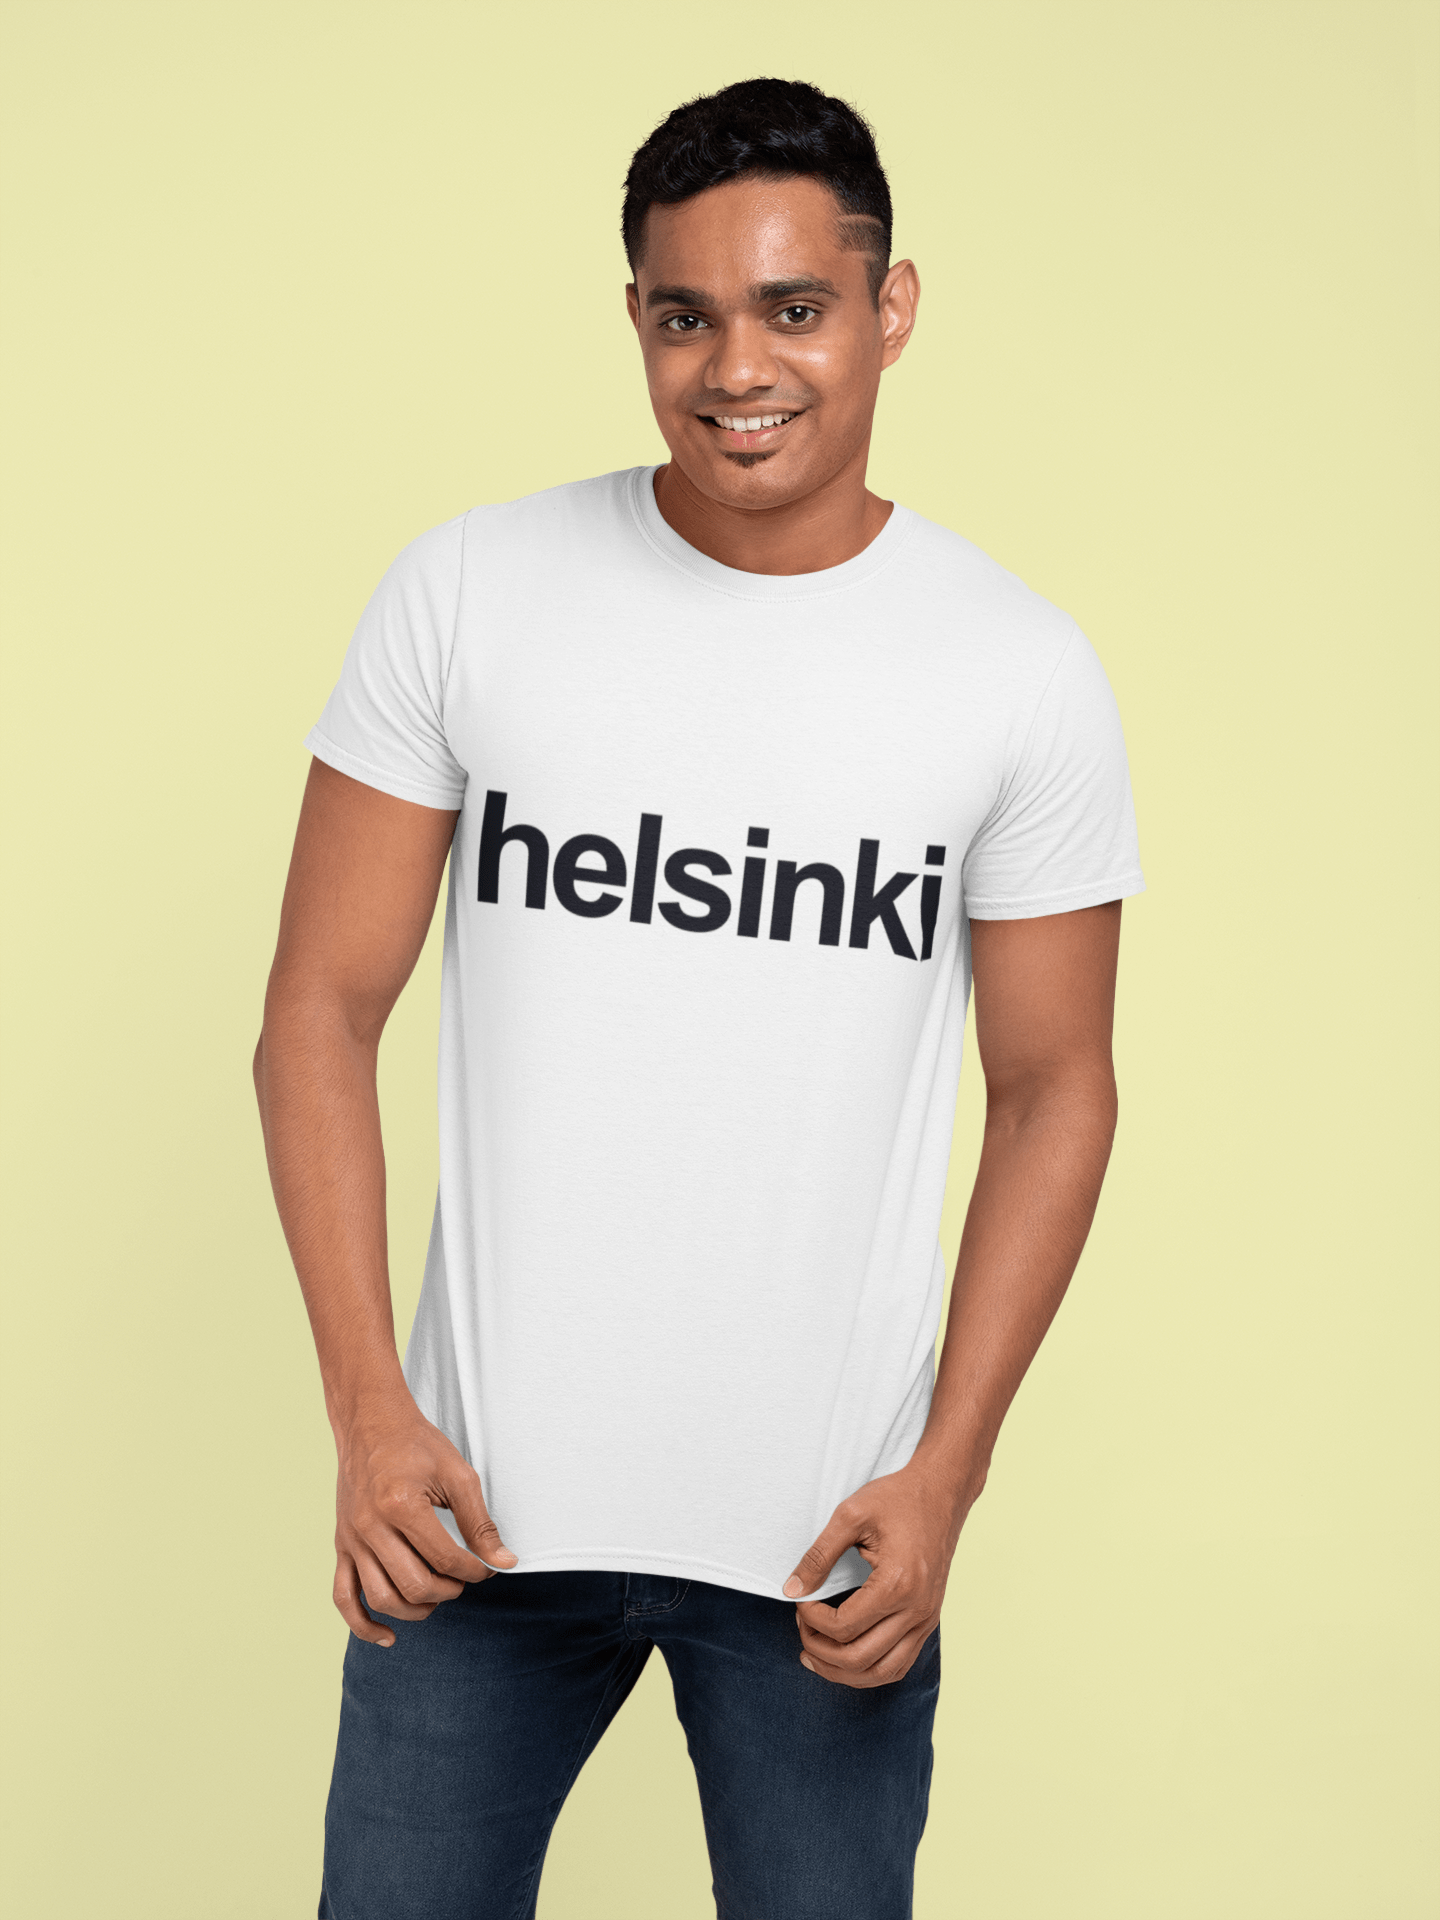 Helsinki Men's Short Sleeve Round Neck T-shirt 00047